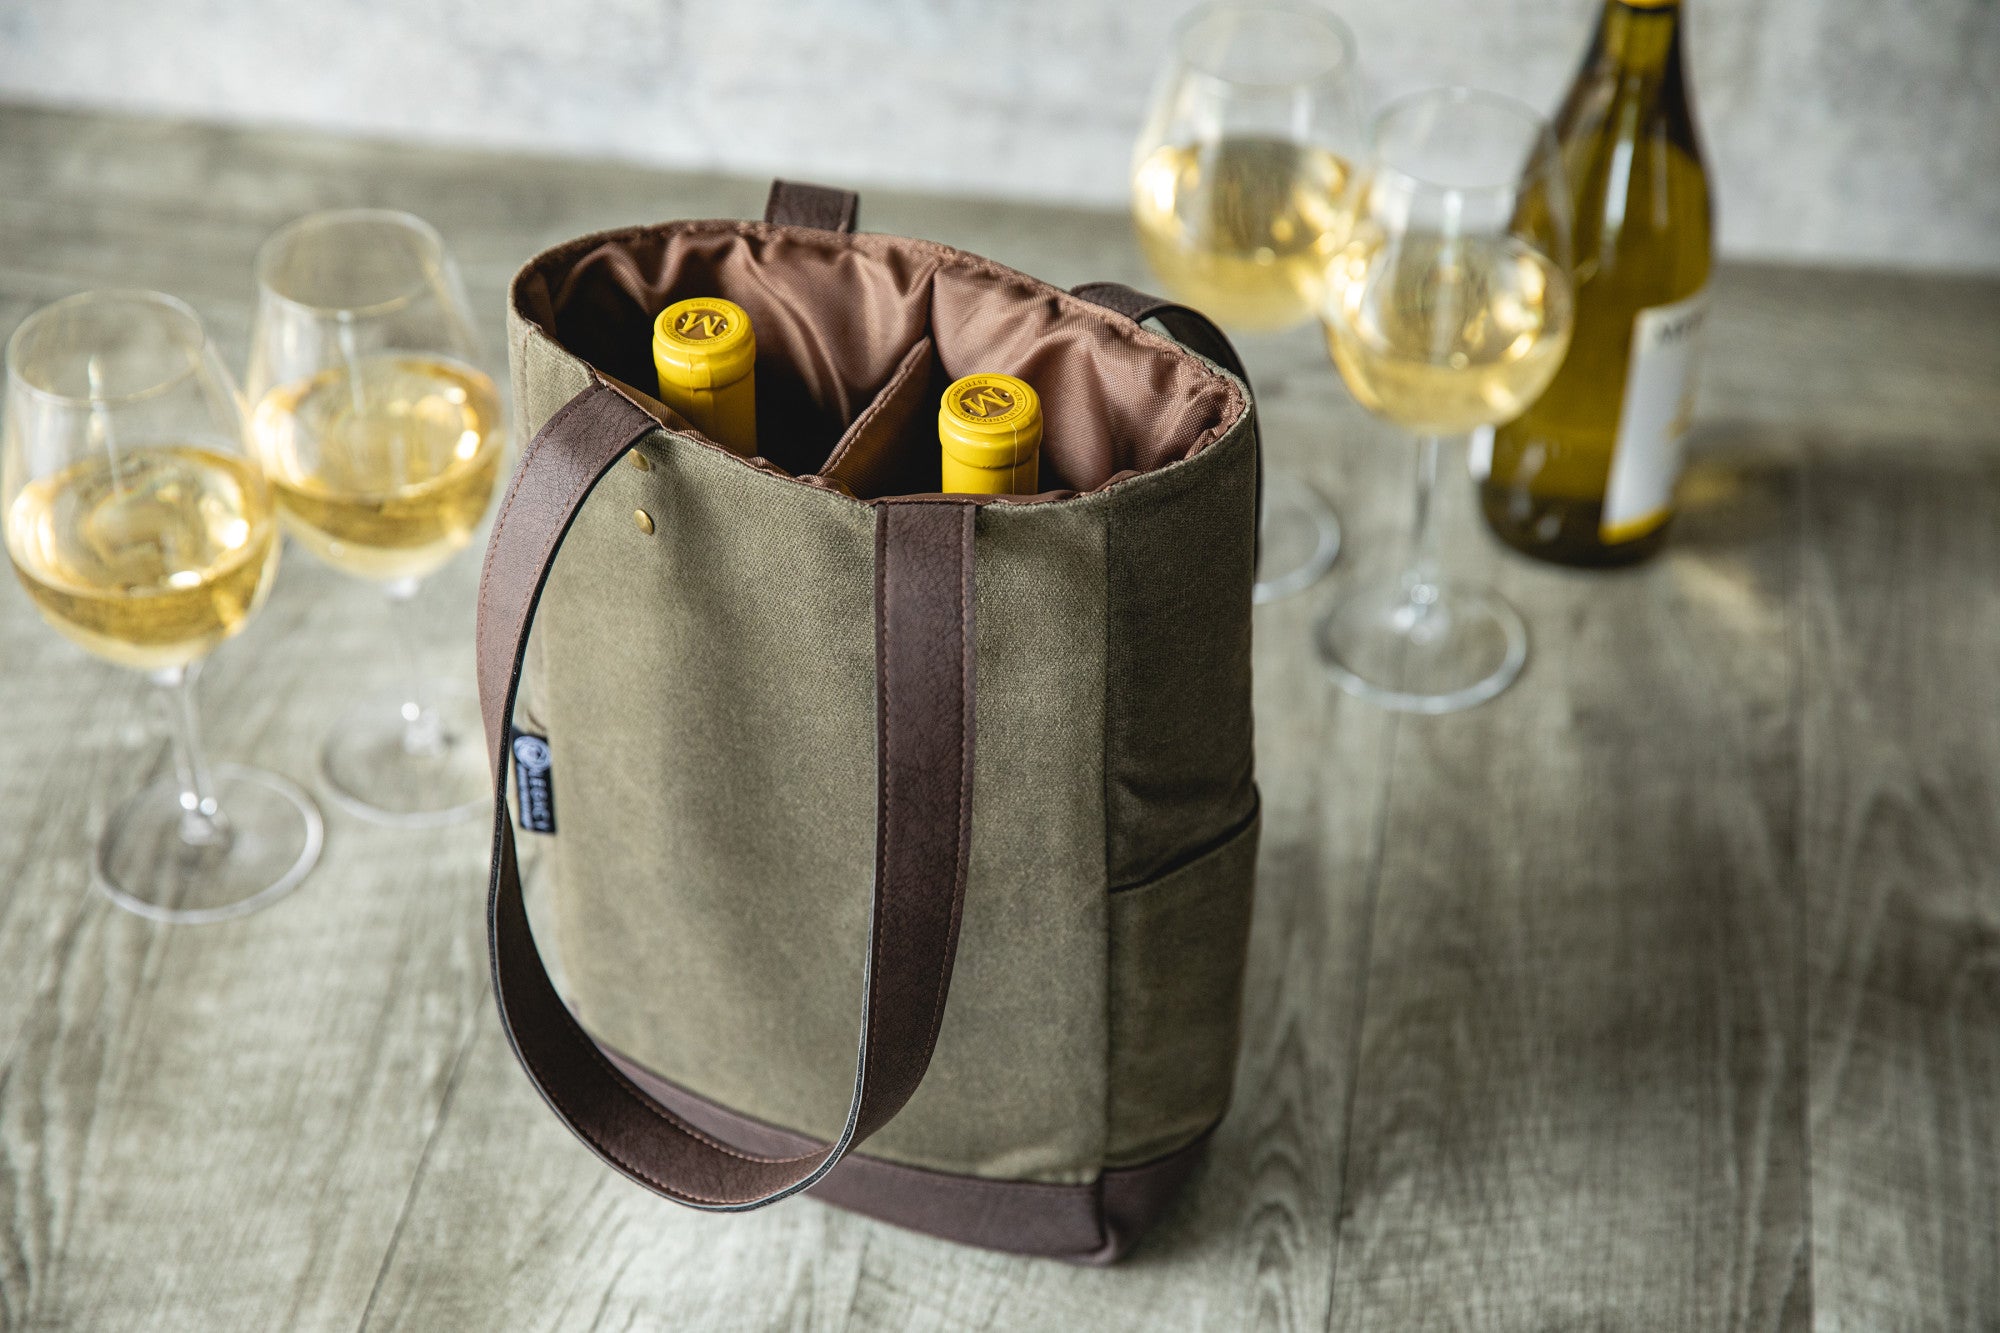 Florida State Seminoles - 2 Bottle Insulated Wine Cooler Bag